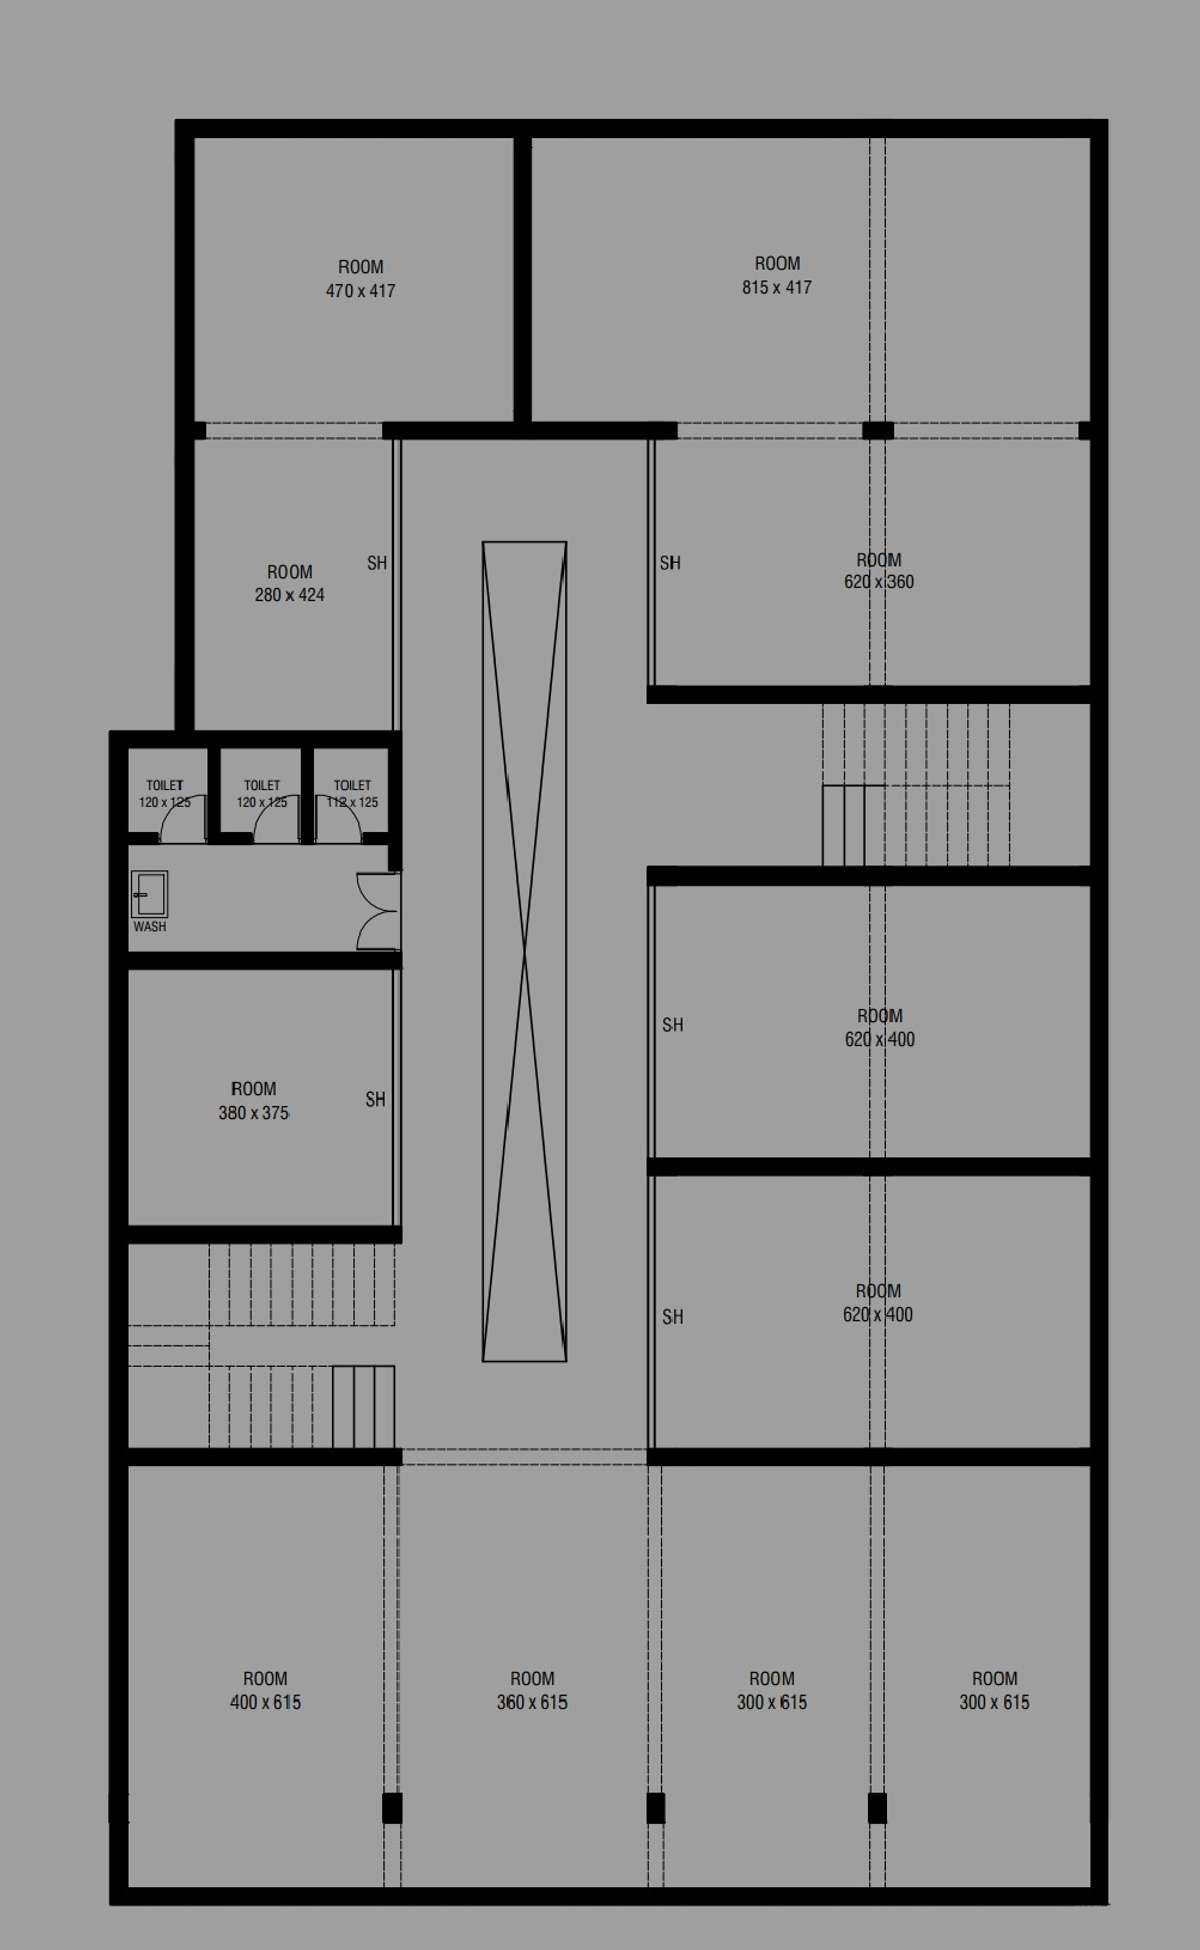 comercial complex
.
.
.
.
.
Living room interior design 
Contact us: 9995094050
.
.
.
.
.
.
.
.
.
.
.
.
.
.
.
.
.
.
.
.
.
.
.
#FloorPlans #valanchery #kuttippuram #edappal #perintahalmanna #kottakkal #puthanathani #tirur #ponnani